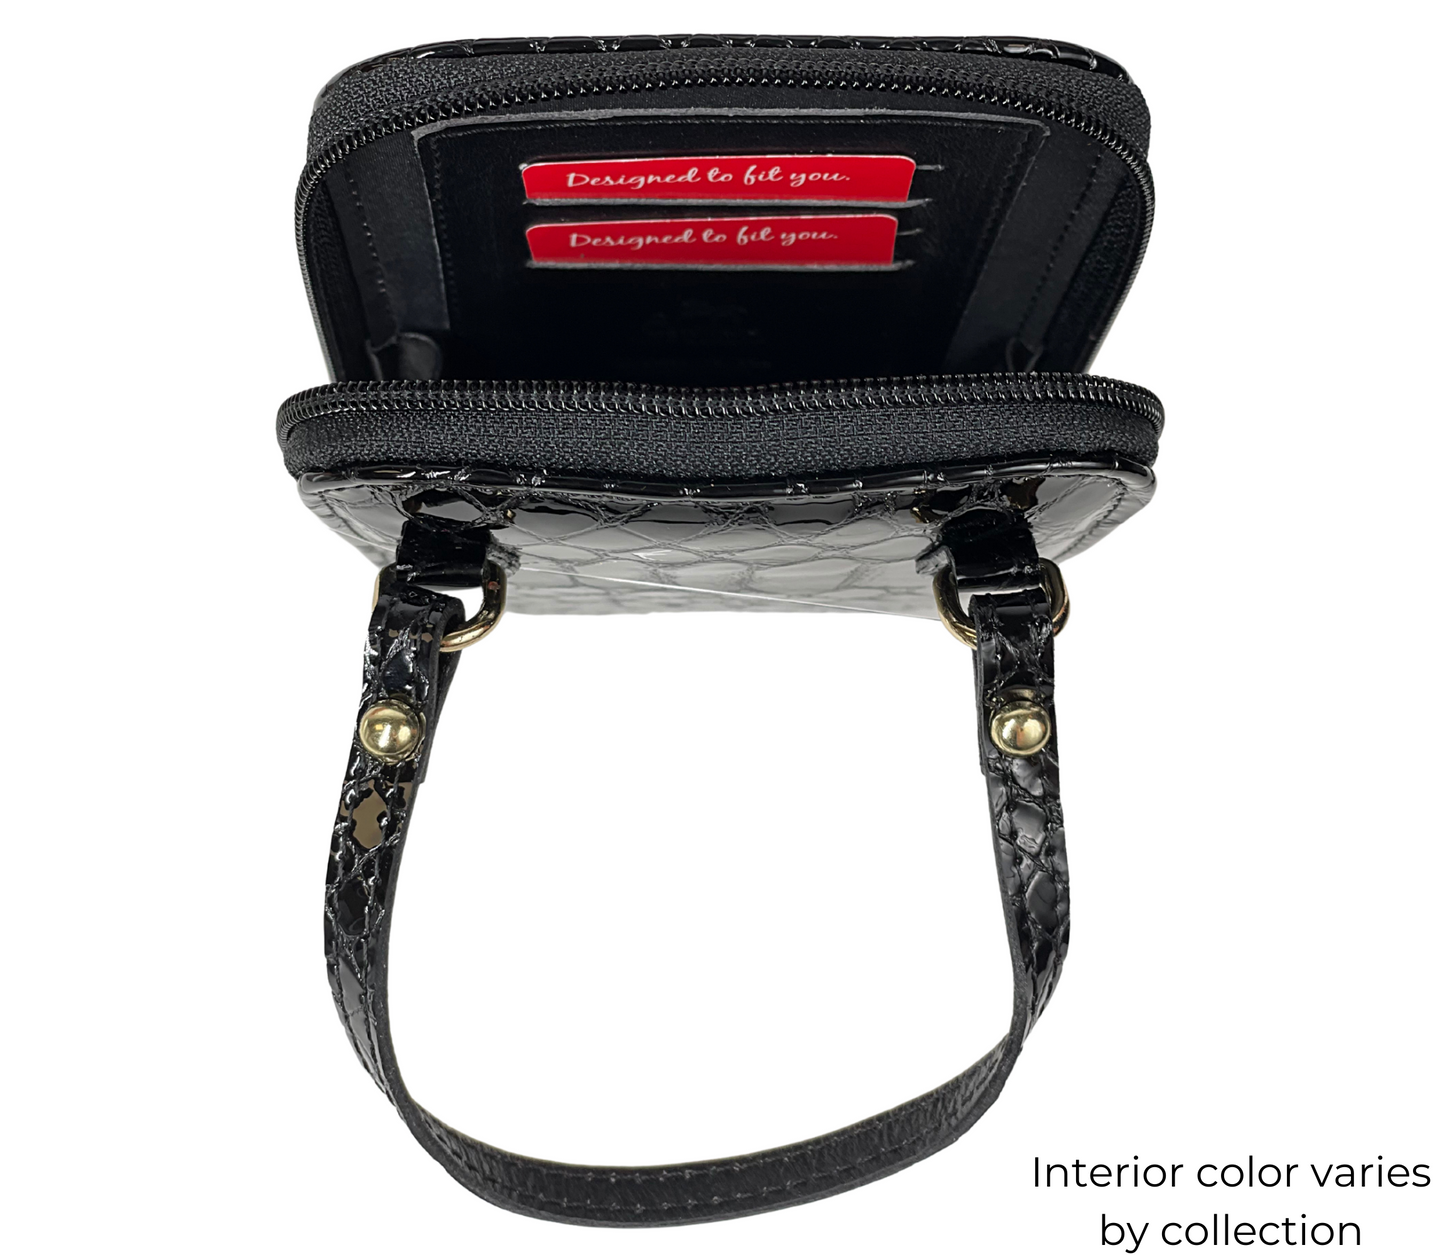 Cavalinho Cavalo Lusitano Leather Phone Purse - Black - 28090278.01-Internal0278.01